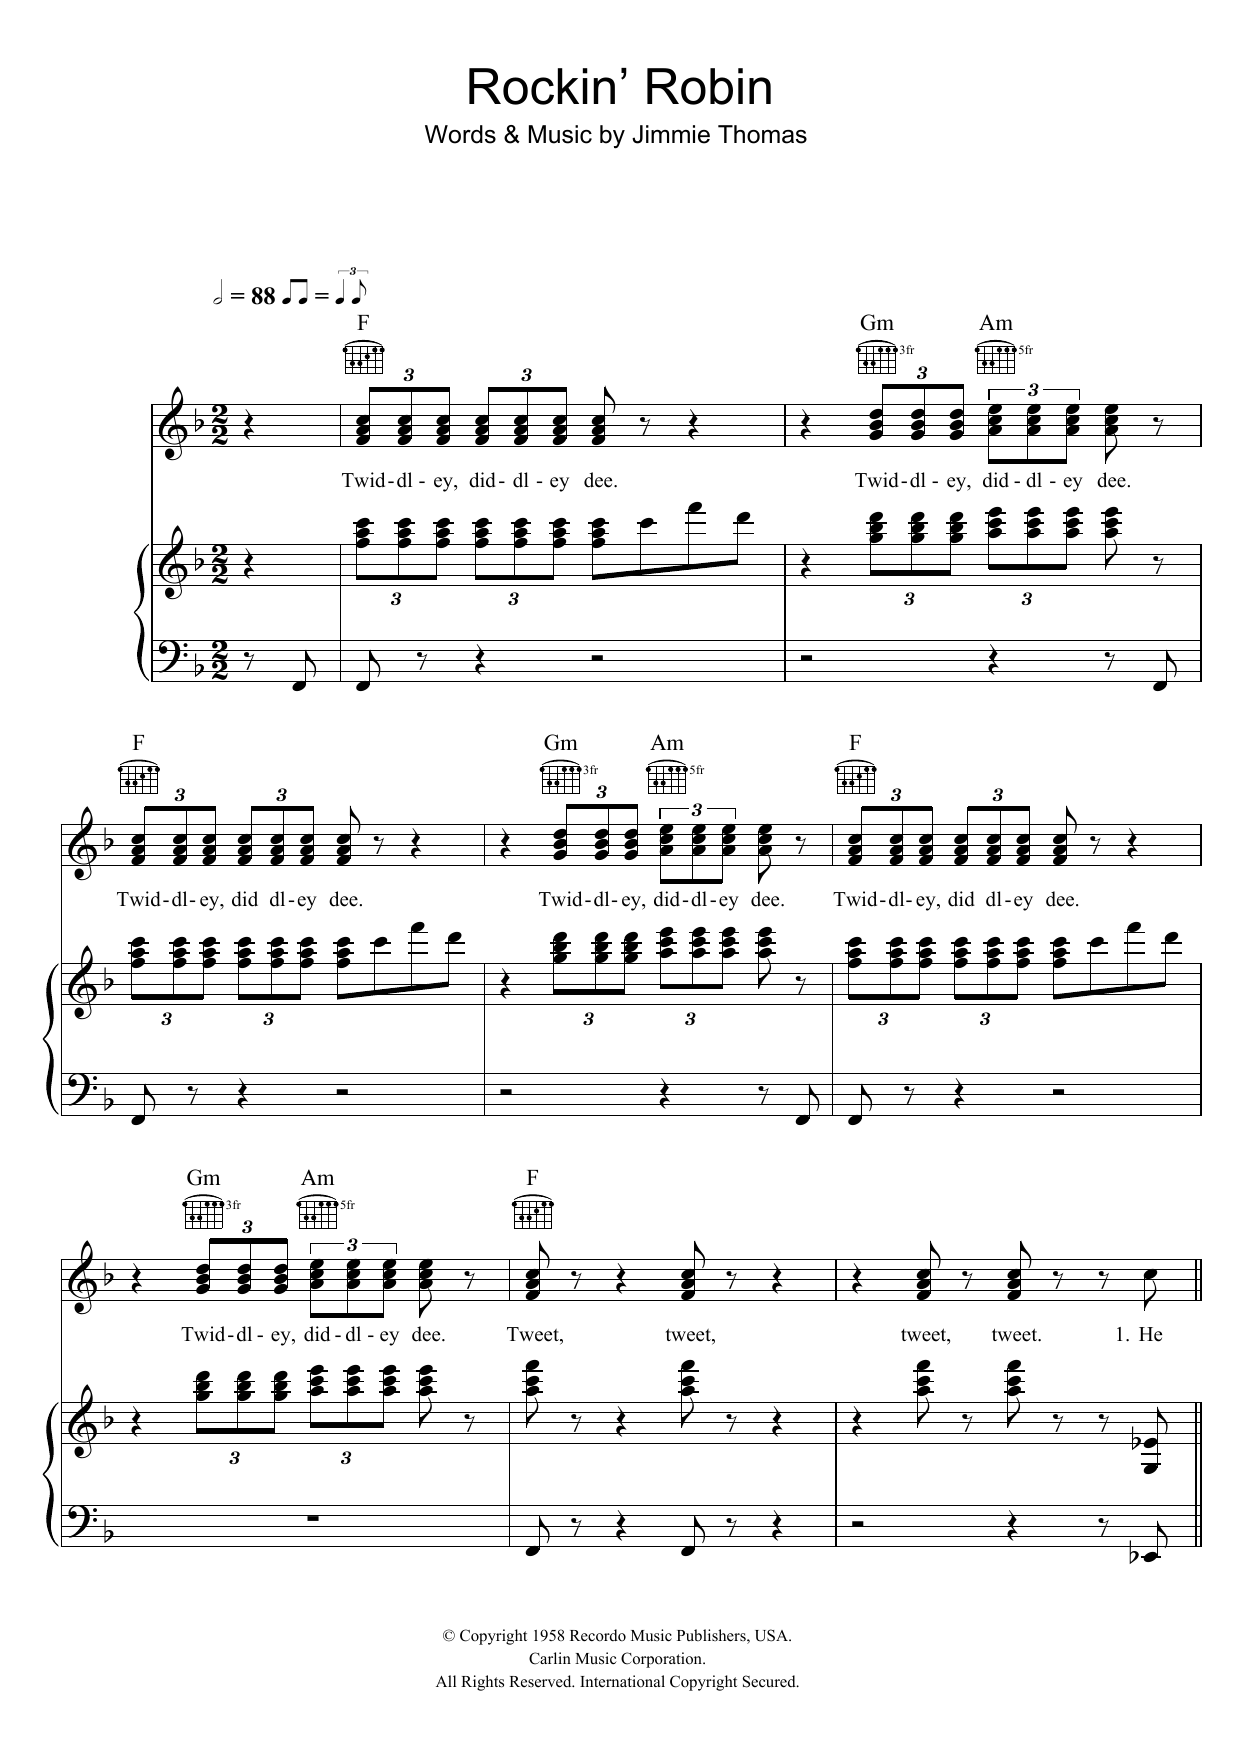 J. Thomas Rockin' Robin Sheet Music Notes & Chords for Ukulele - Download or Print PDF